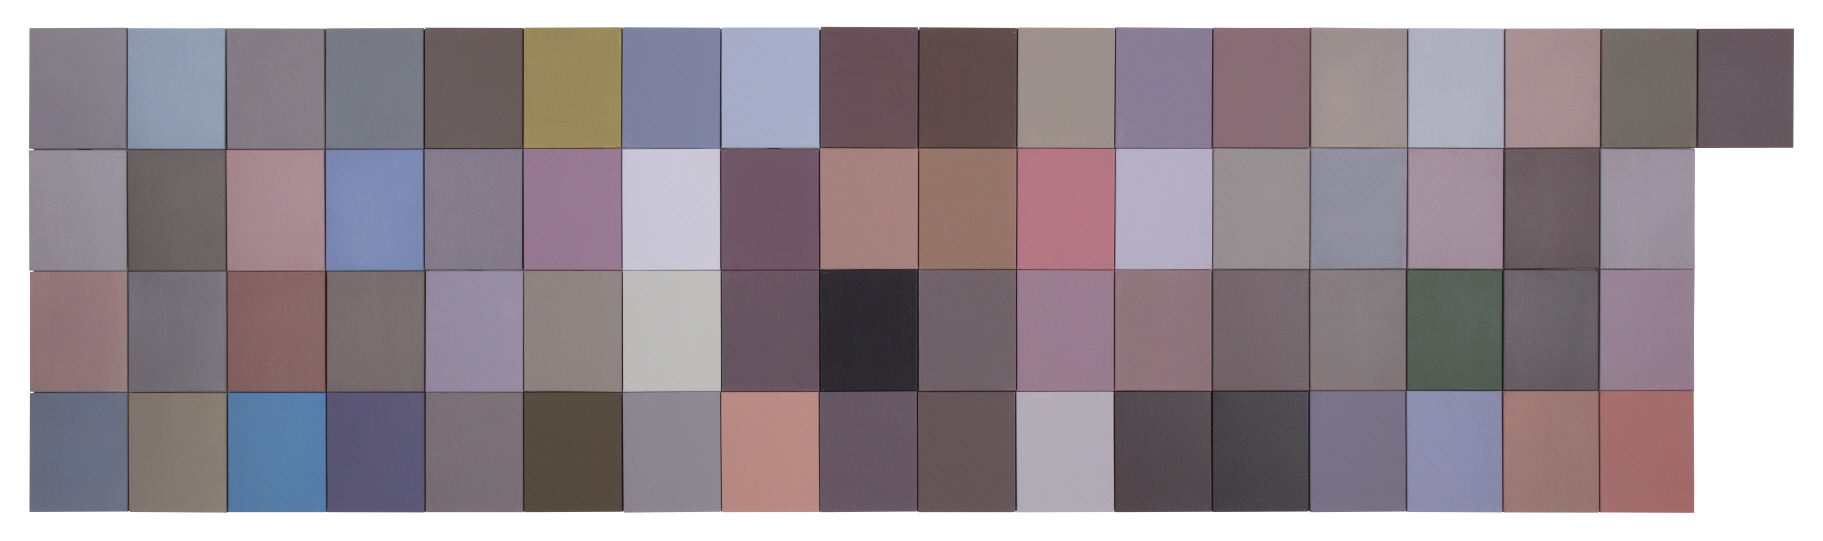 AHN Kyuchul, Colors of Promises, 2020, Oil on canvas, 27.5x22.3cm (x69)